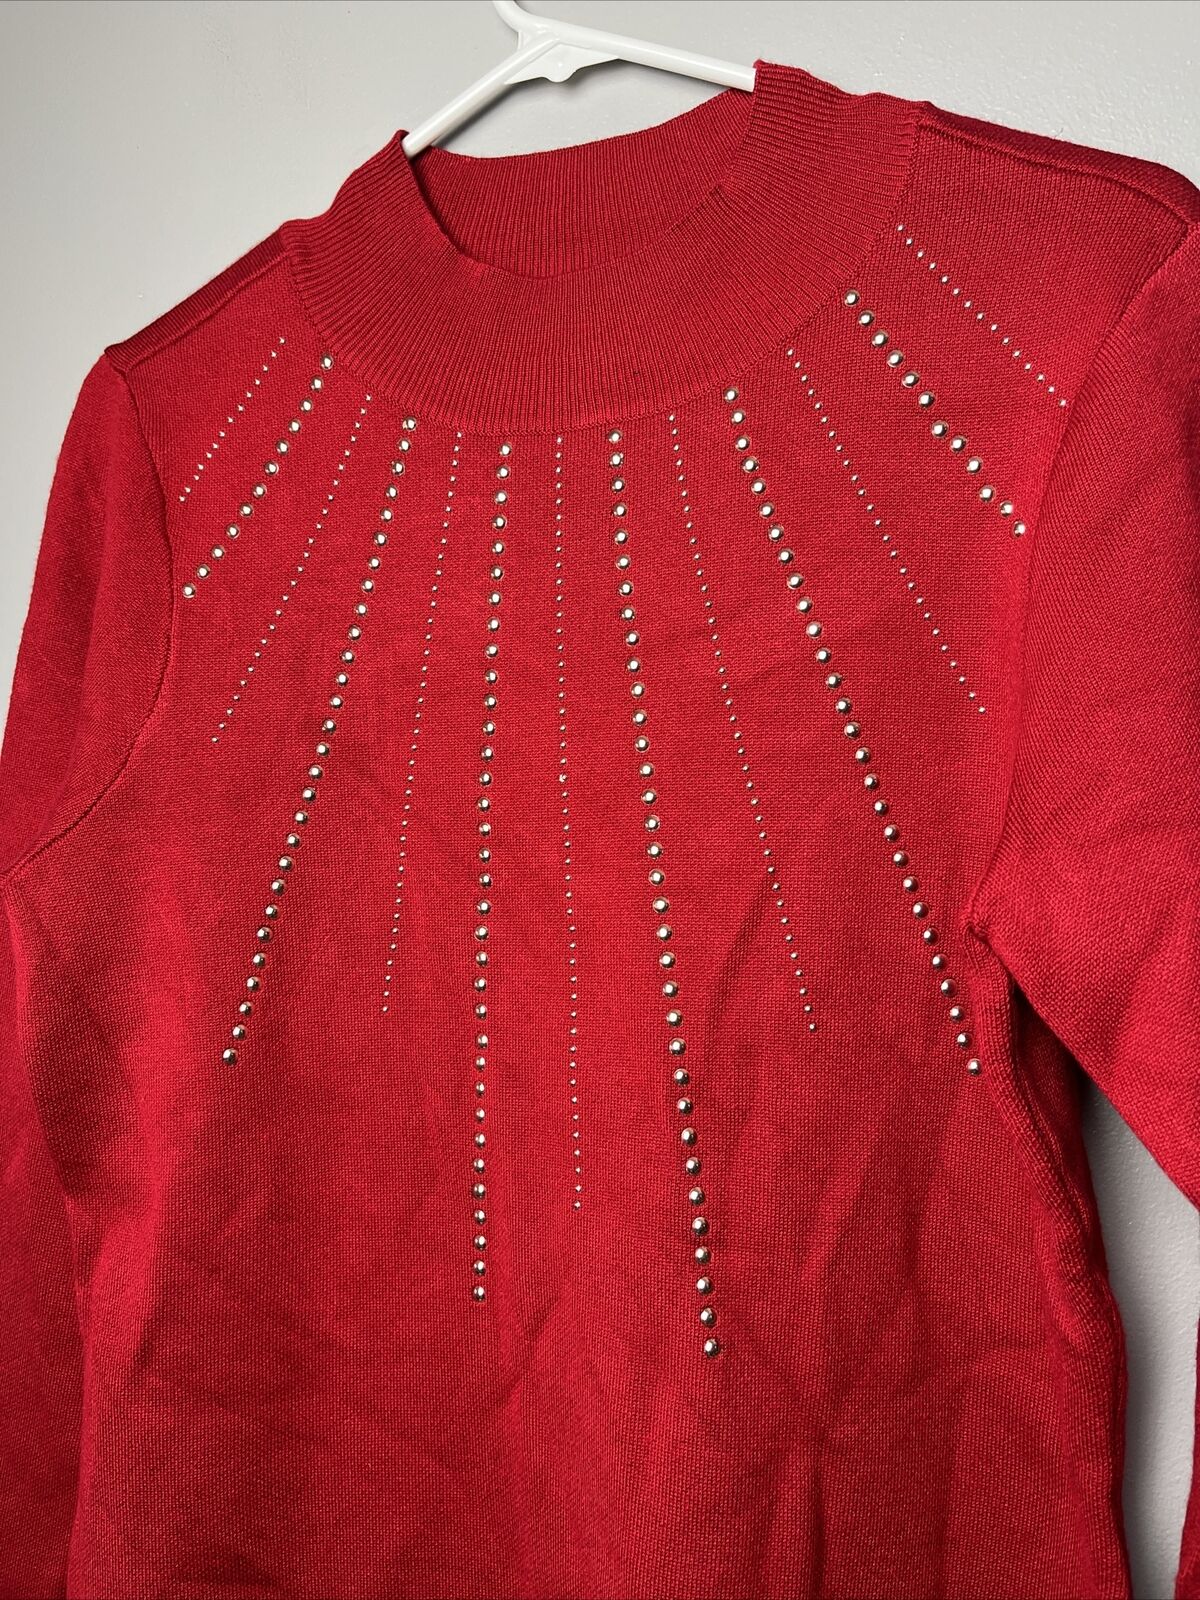 Women's Nina Leonard Studded Red Sweater Dress Size LARGE